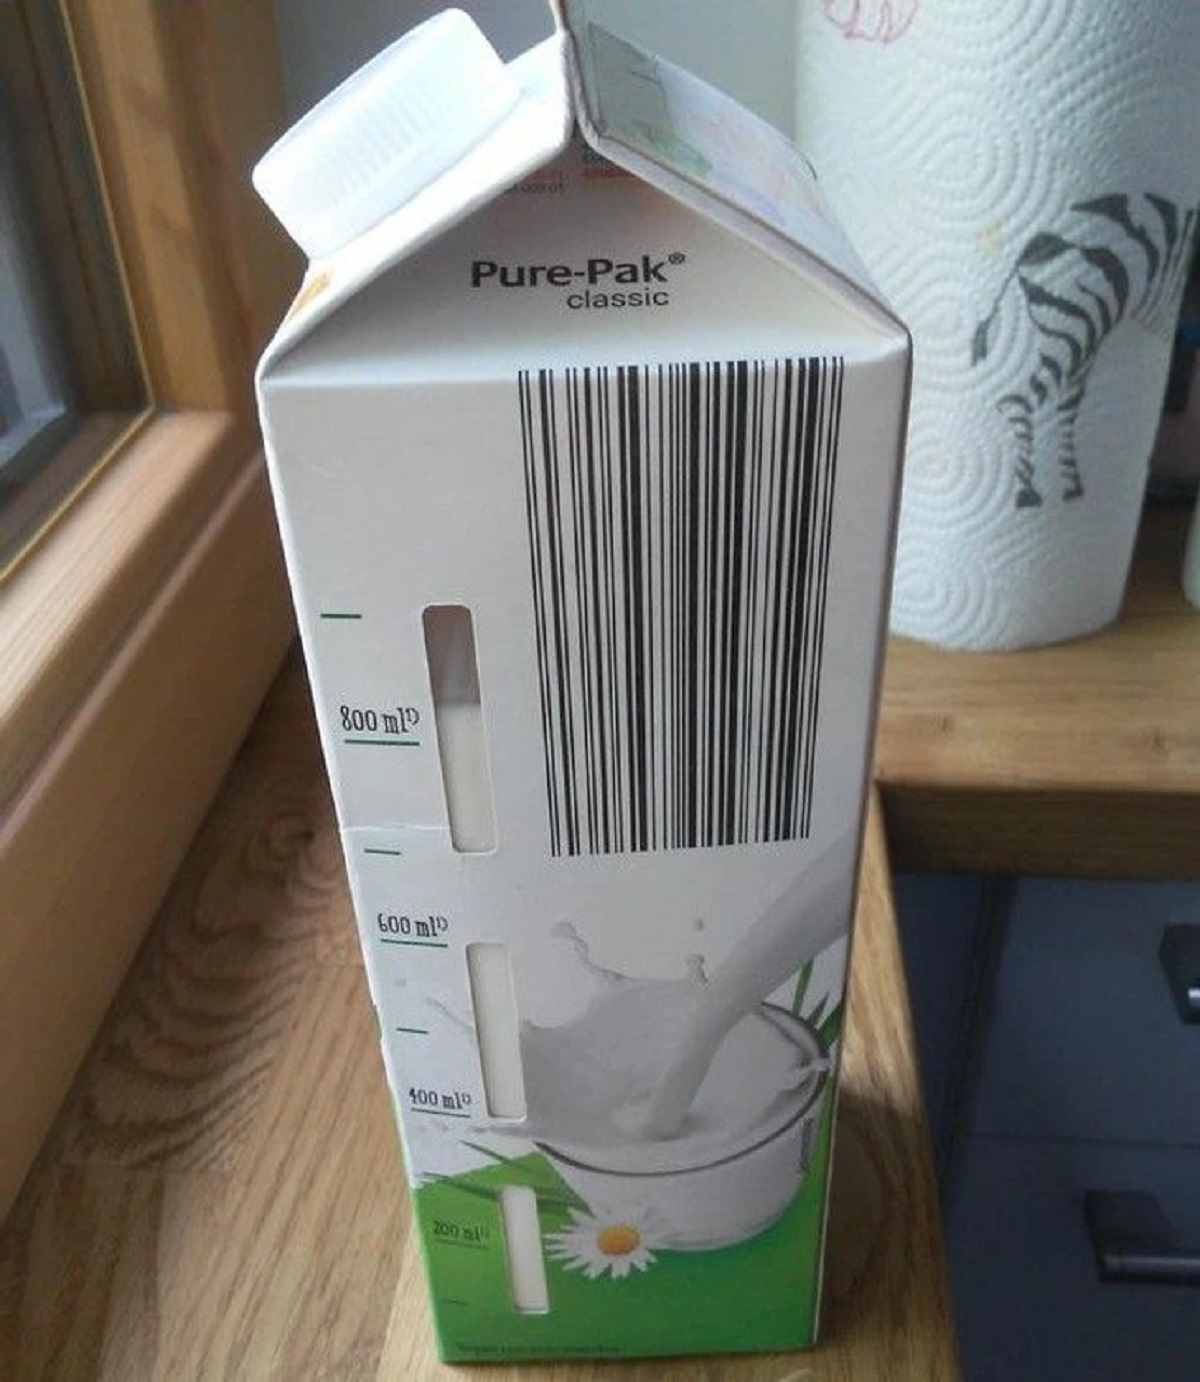 Milk carton shows you how much milk is still inside.